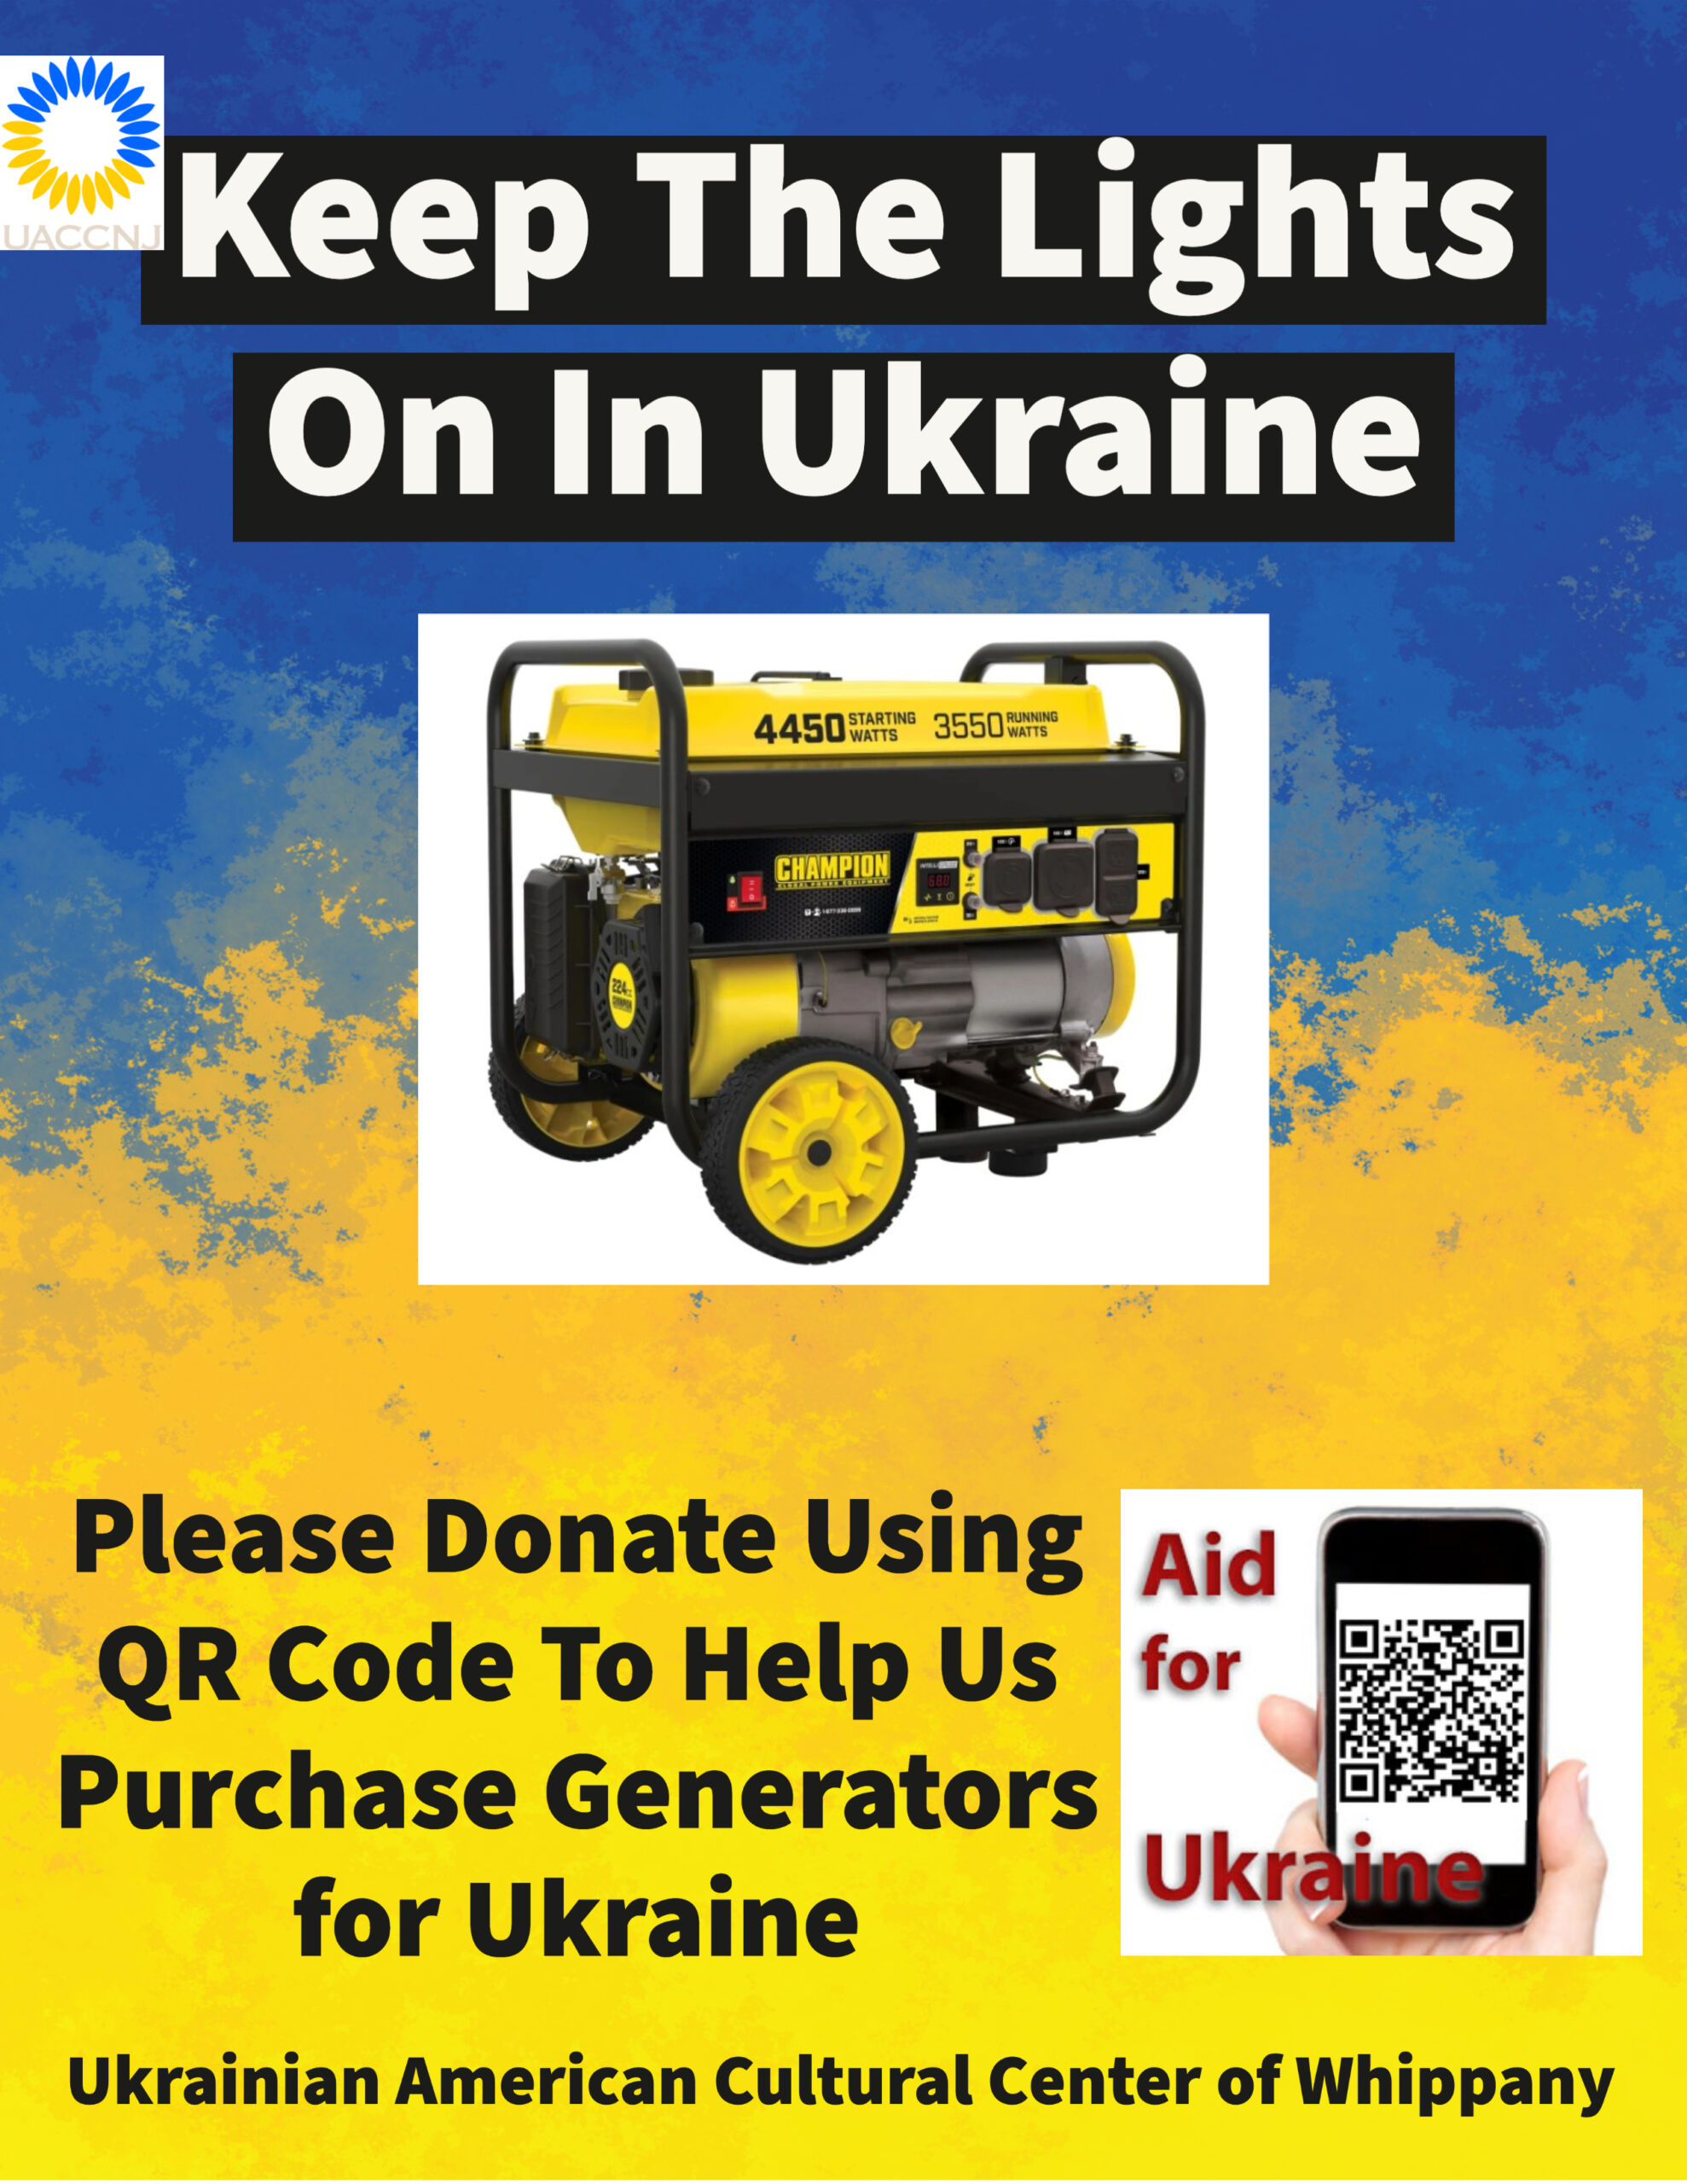 Help Us Purchase Generators for Ukraine scaled Help Us Purchase Generators for Ukraine scaled